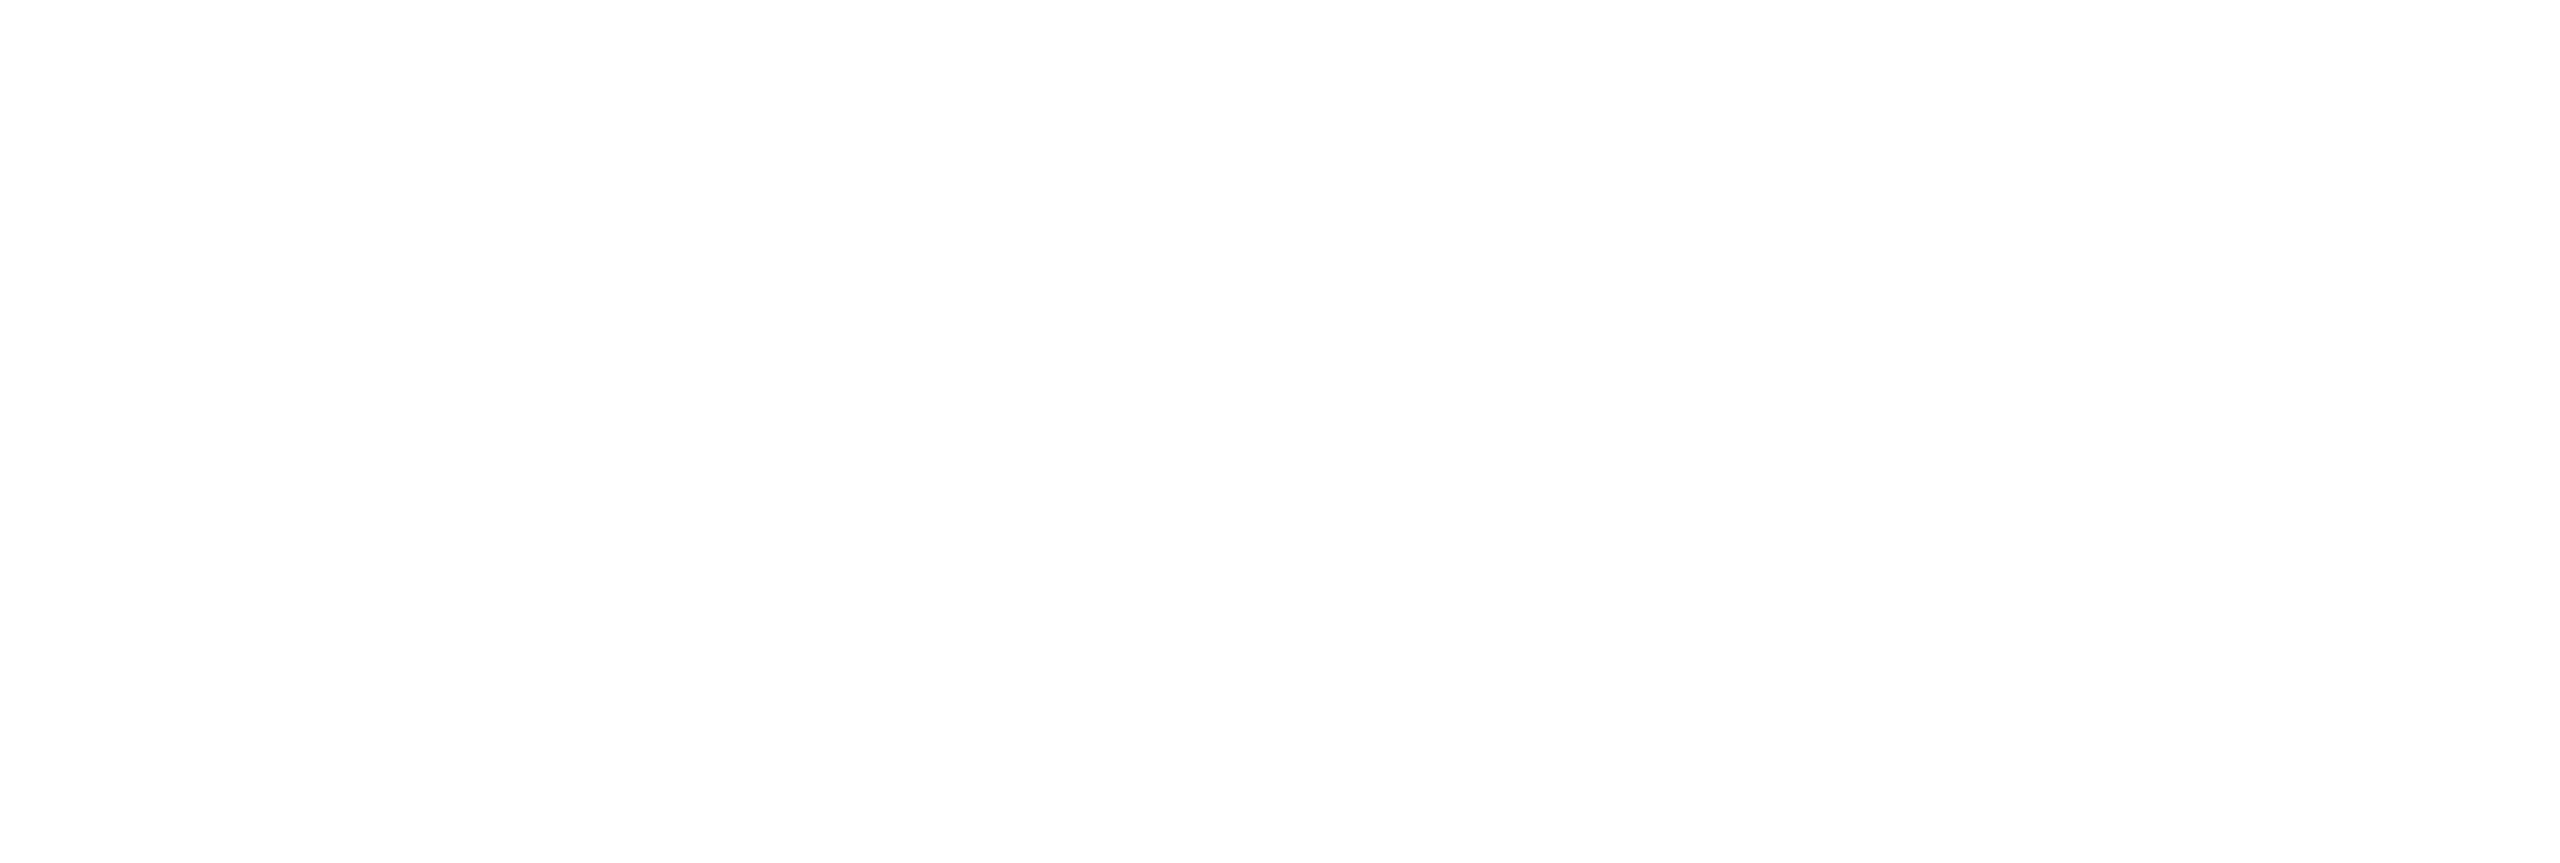 Windstream-Communications-nespon-client-logo.svg